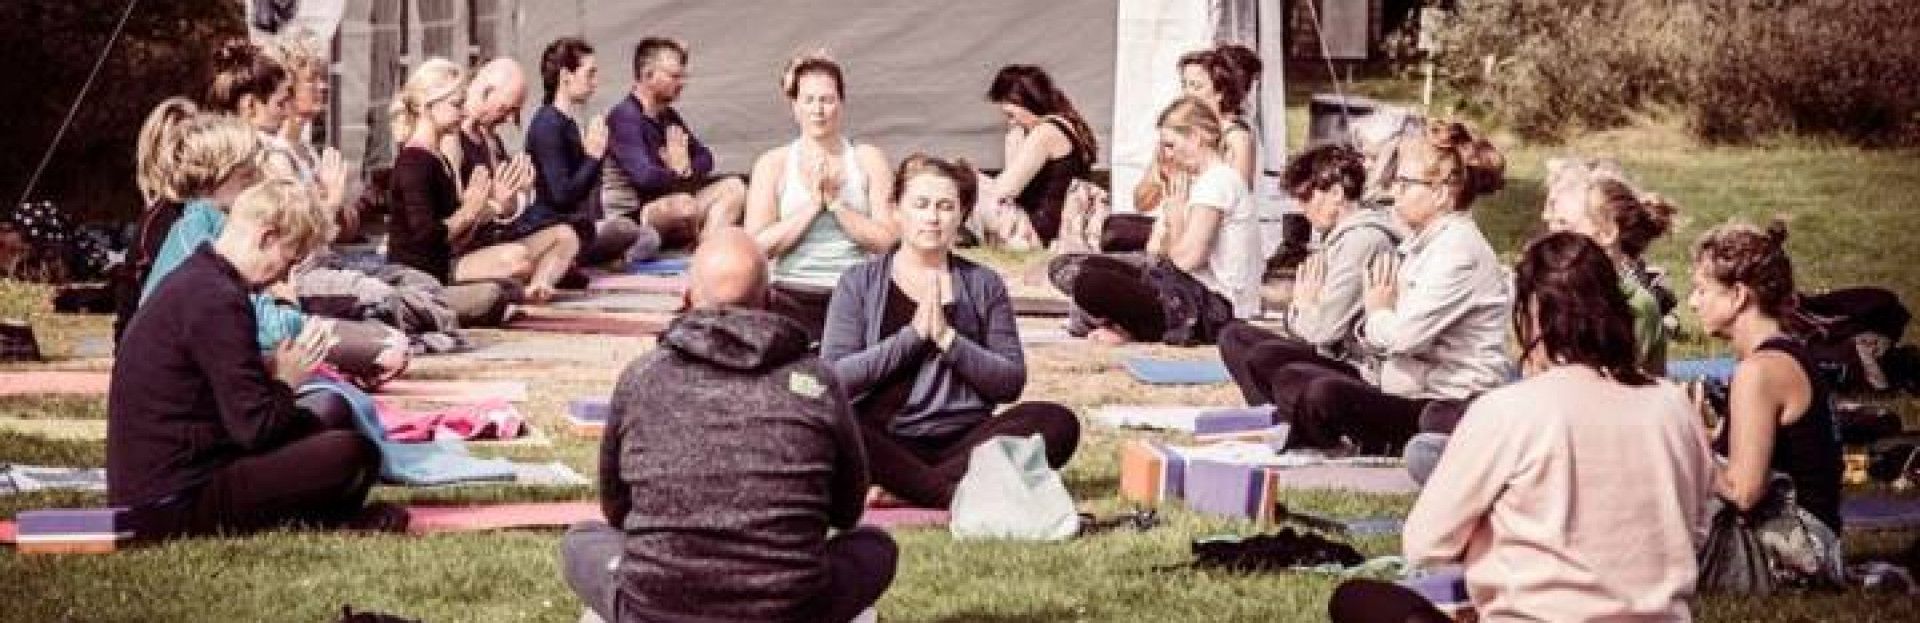 yoga festival Schiermonnikoog